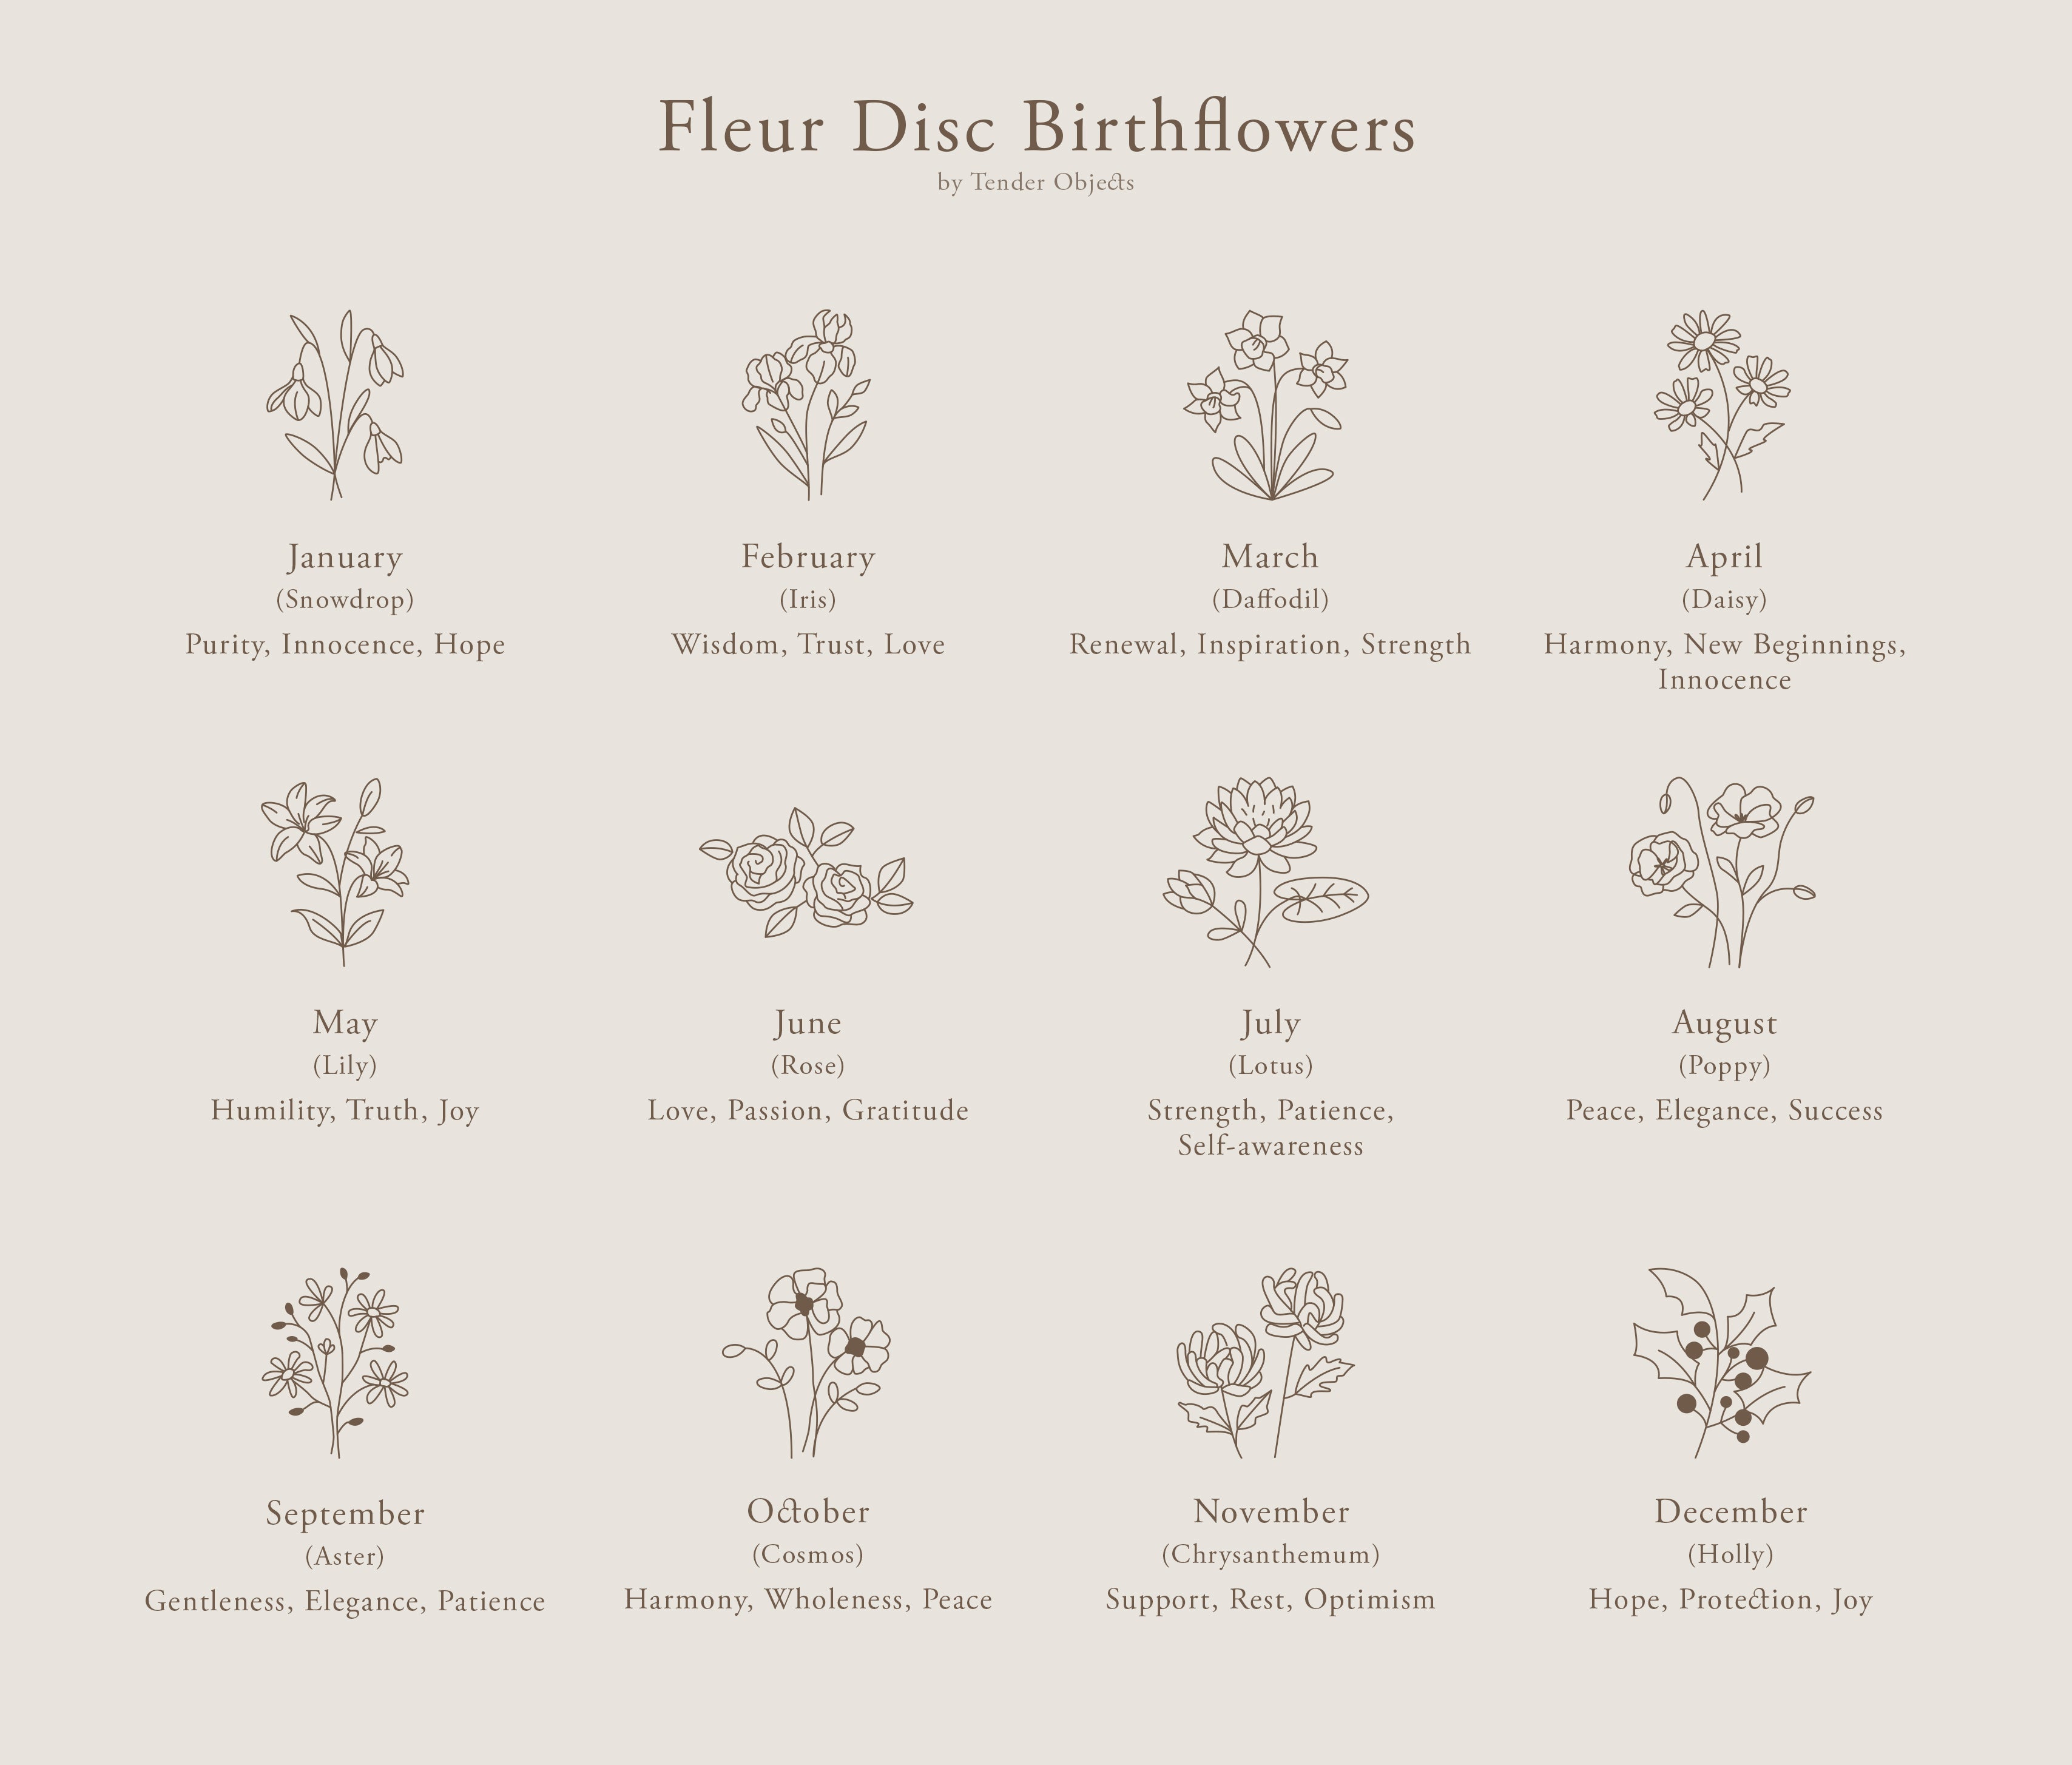 Tender Objects Birthflower Chart